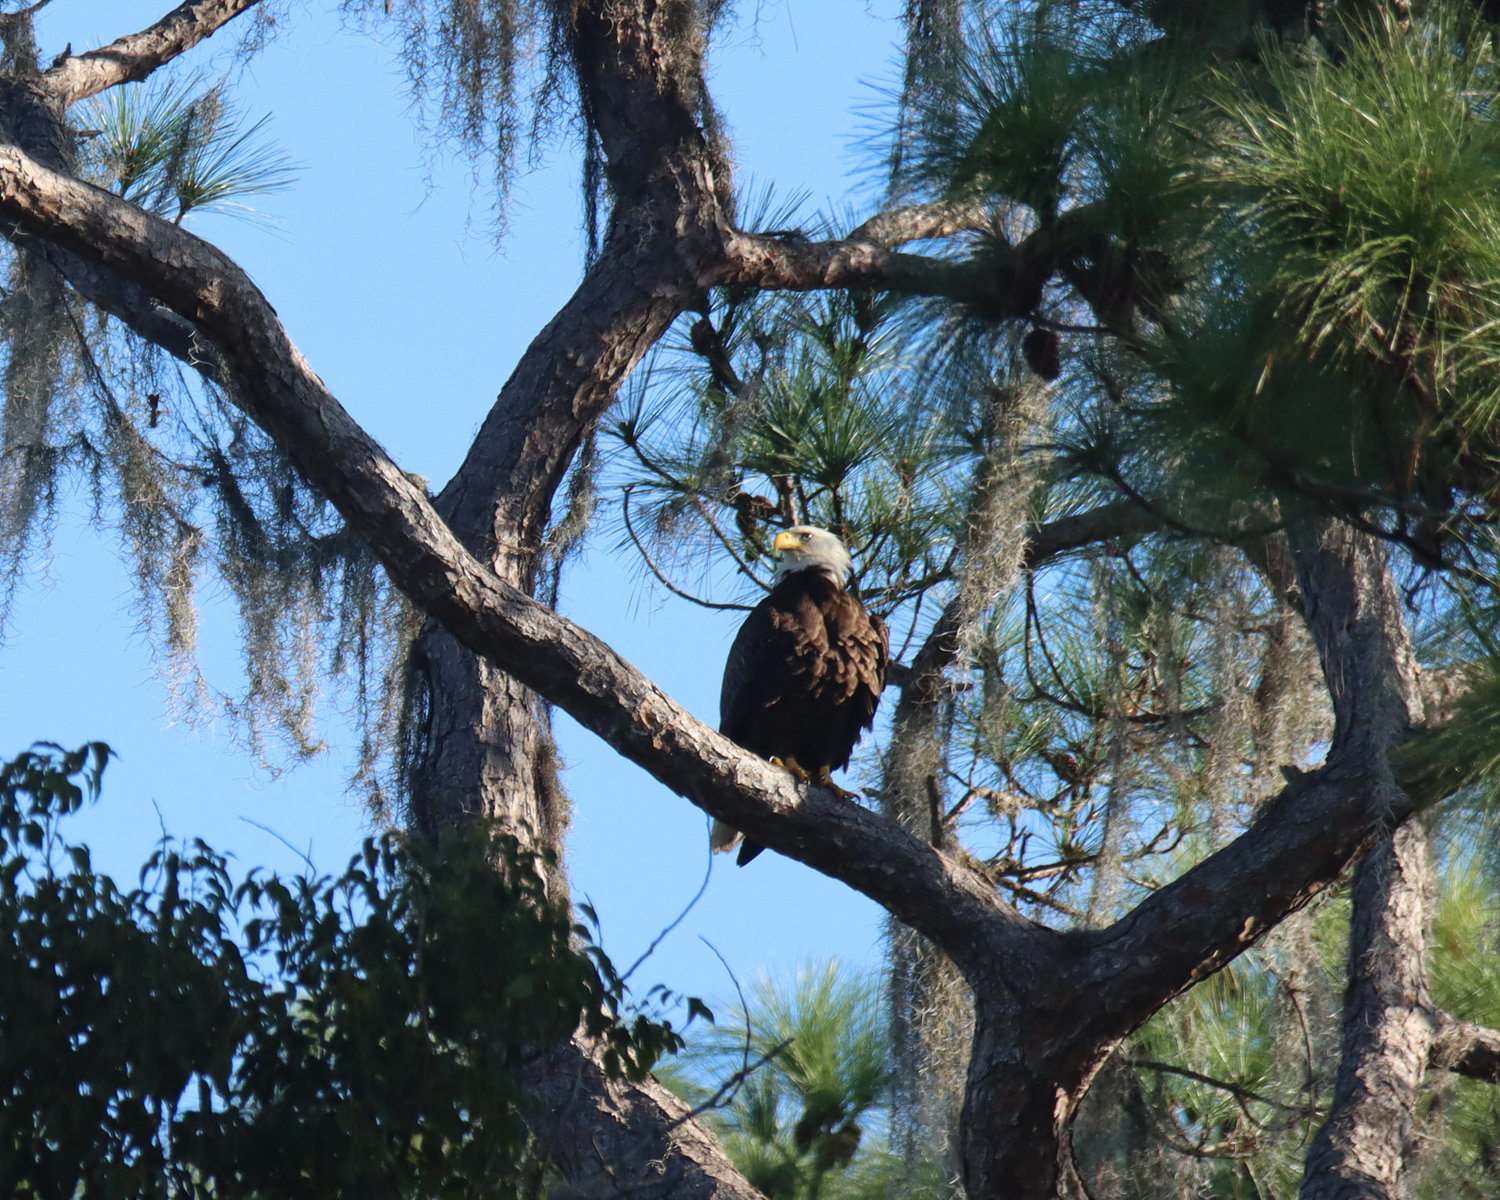 One of the nesting eagles near Lake Jovita in Pasco County.